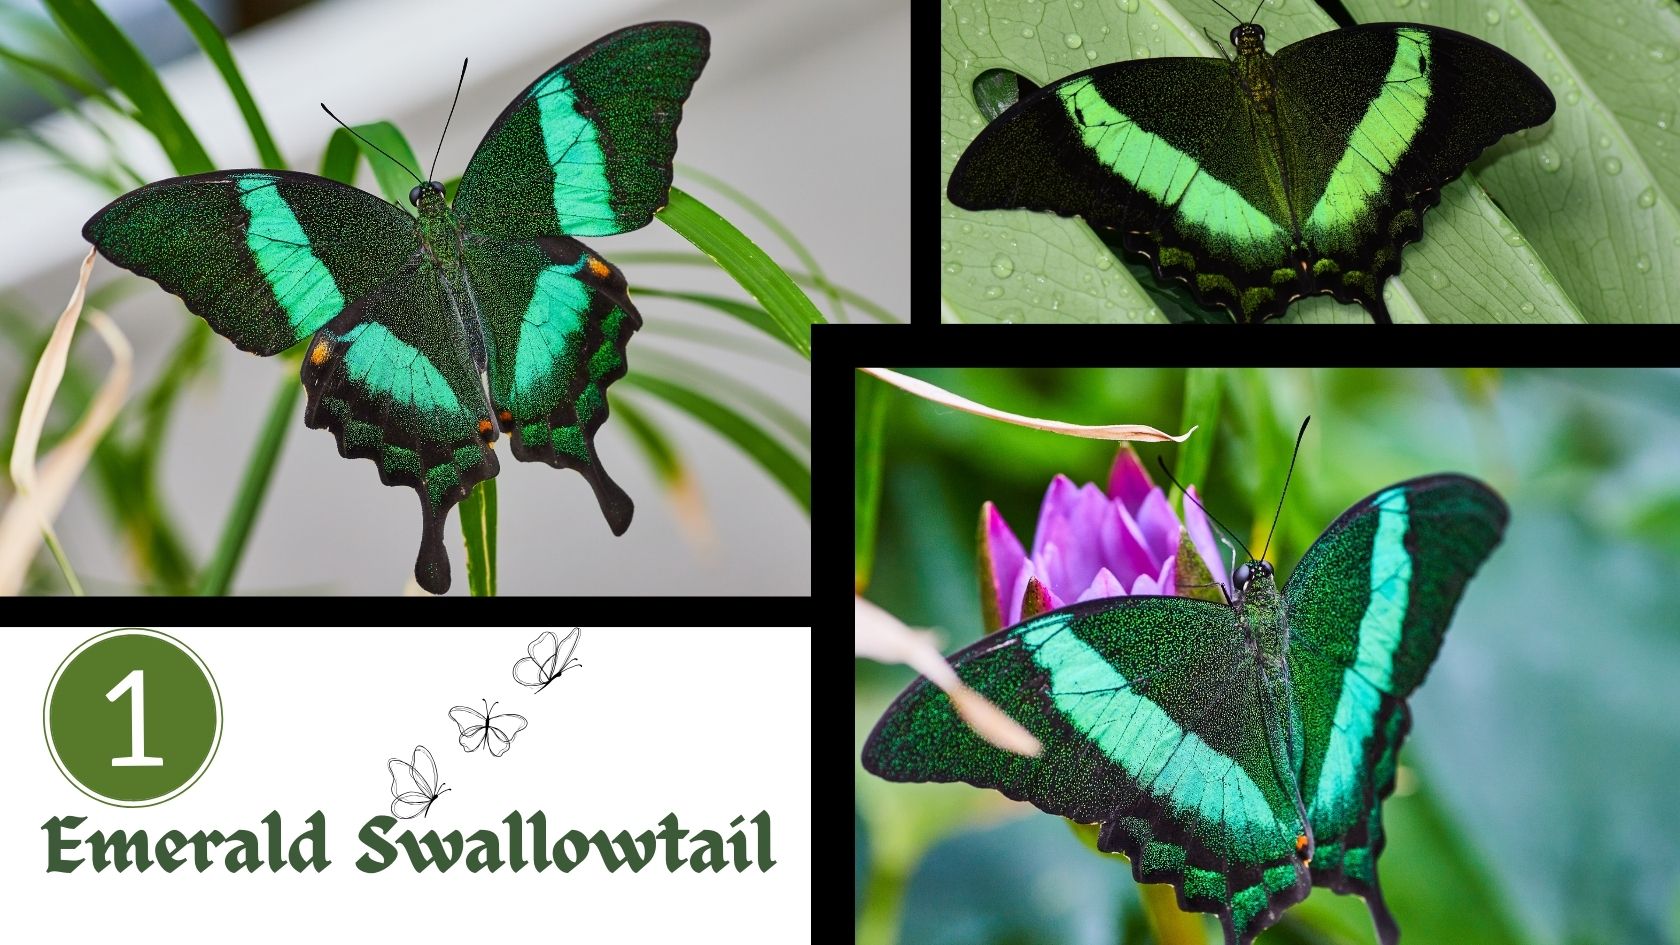 Emerald Swallowtail (Papilio palinurus):